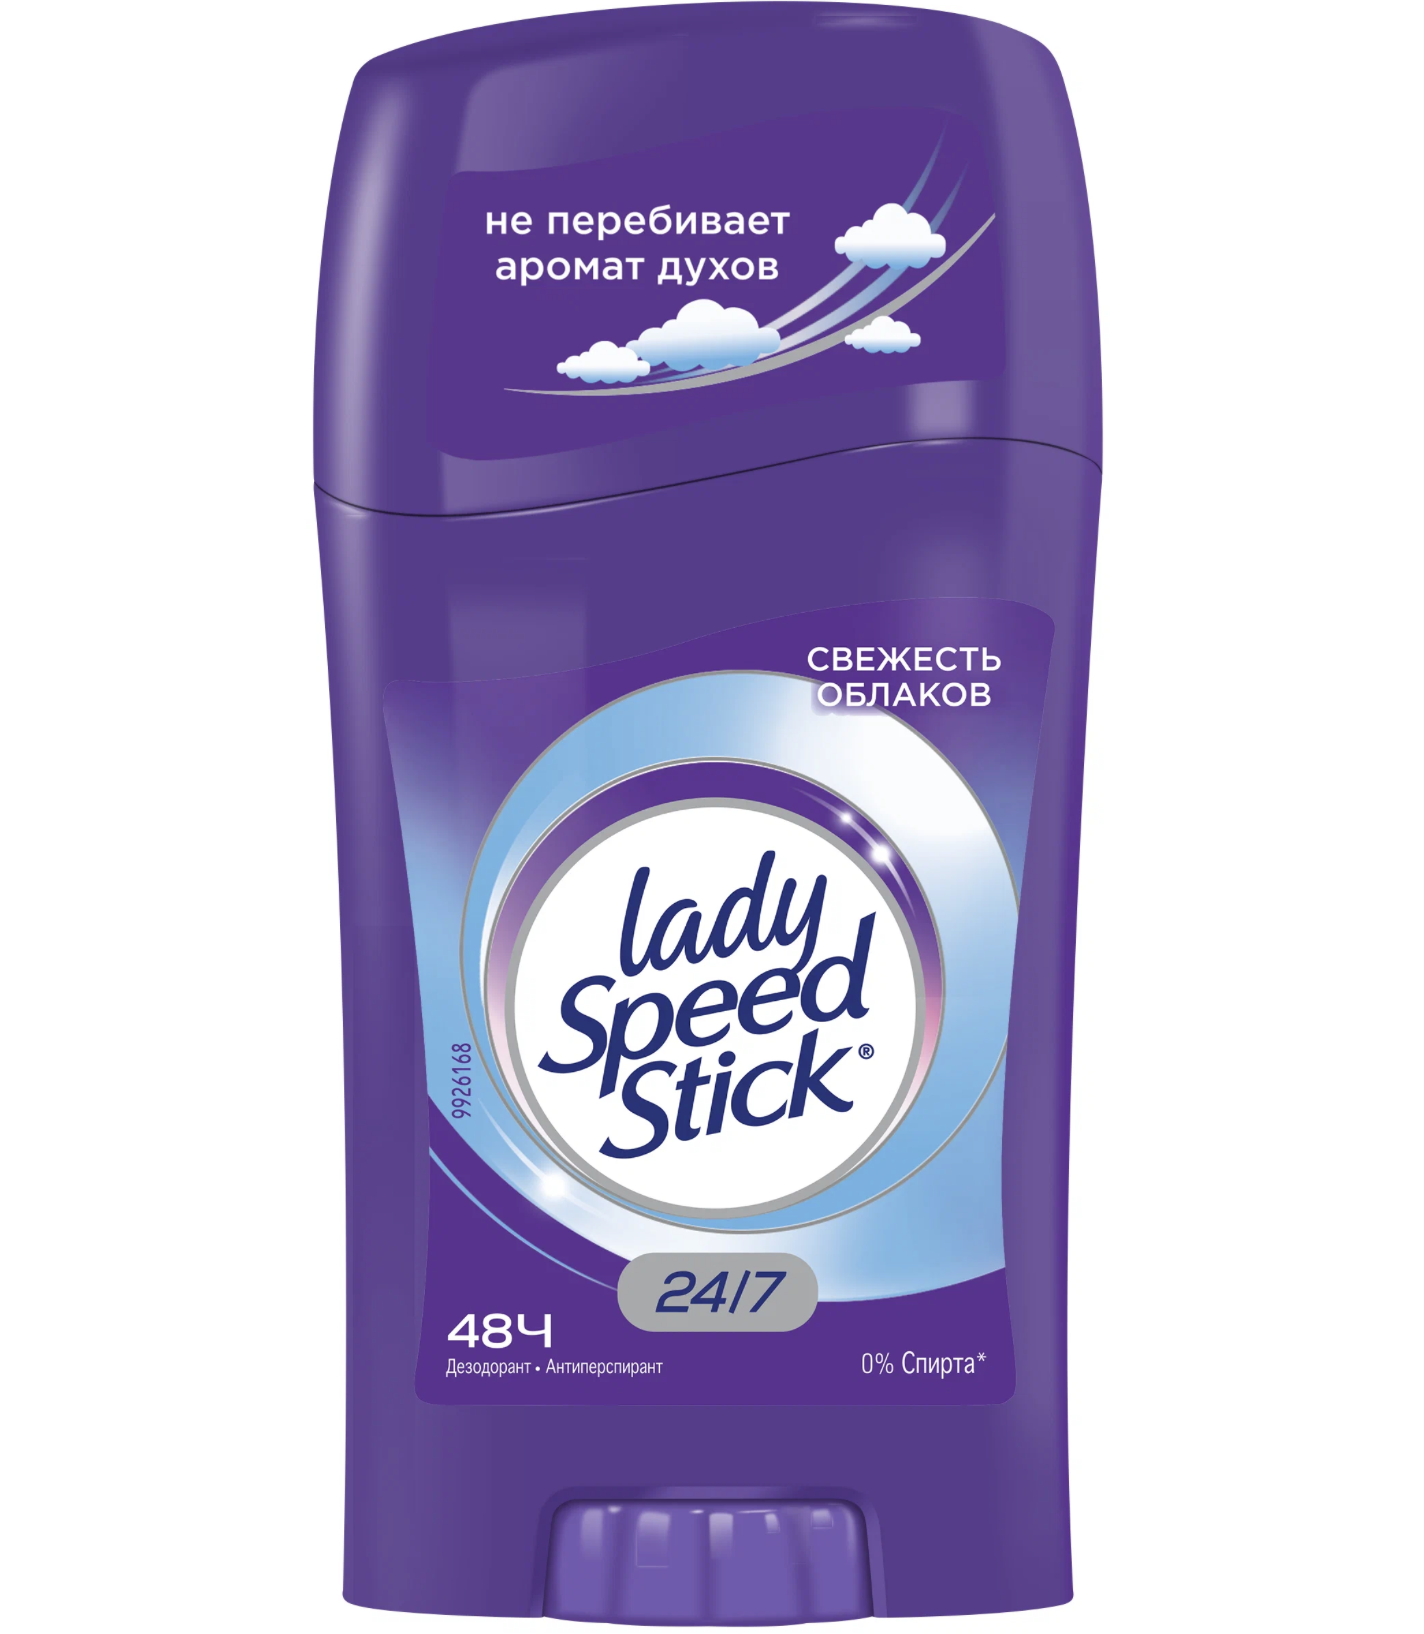 Купить дезодорант леди спид стик. Дезодорант Lady Speed Stick. Lady Speed Stick 45г 24/7 "дыхание свежести" твёрдый. Дезодорант Lady Speed Stick стик дыхание свежести,45гр. Дезодорант-антиперспирант гель Lady Speed Stick 24/7 дыхание свежести.